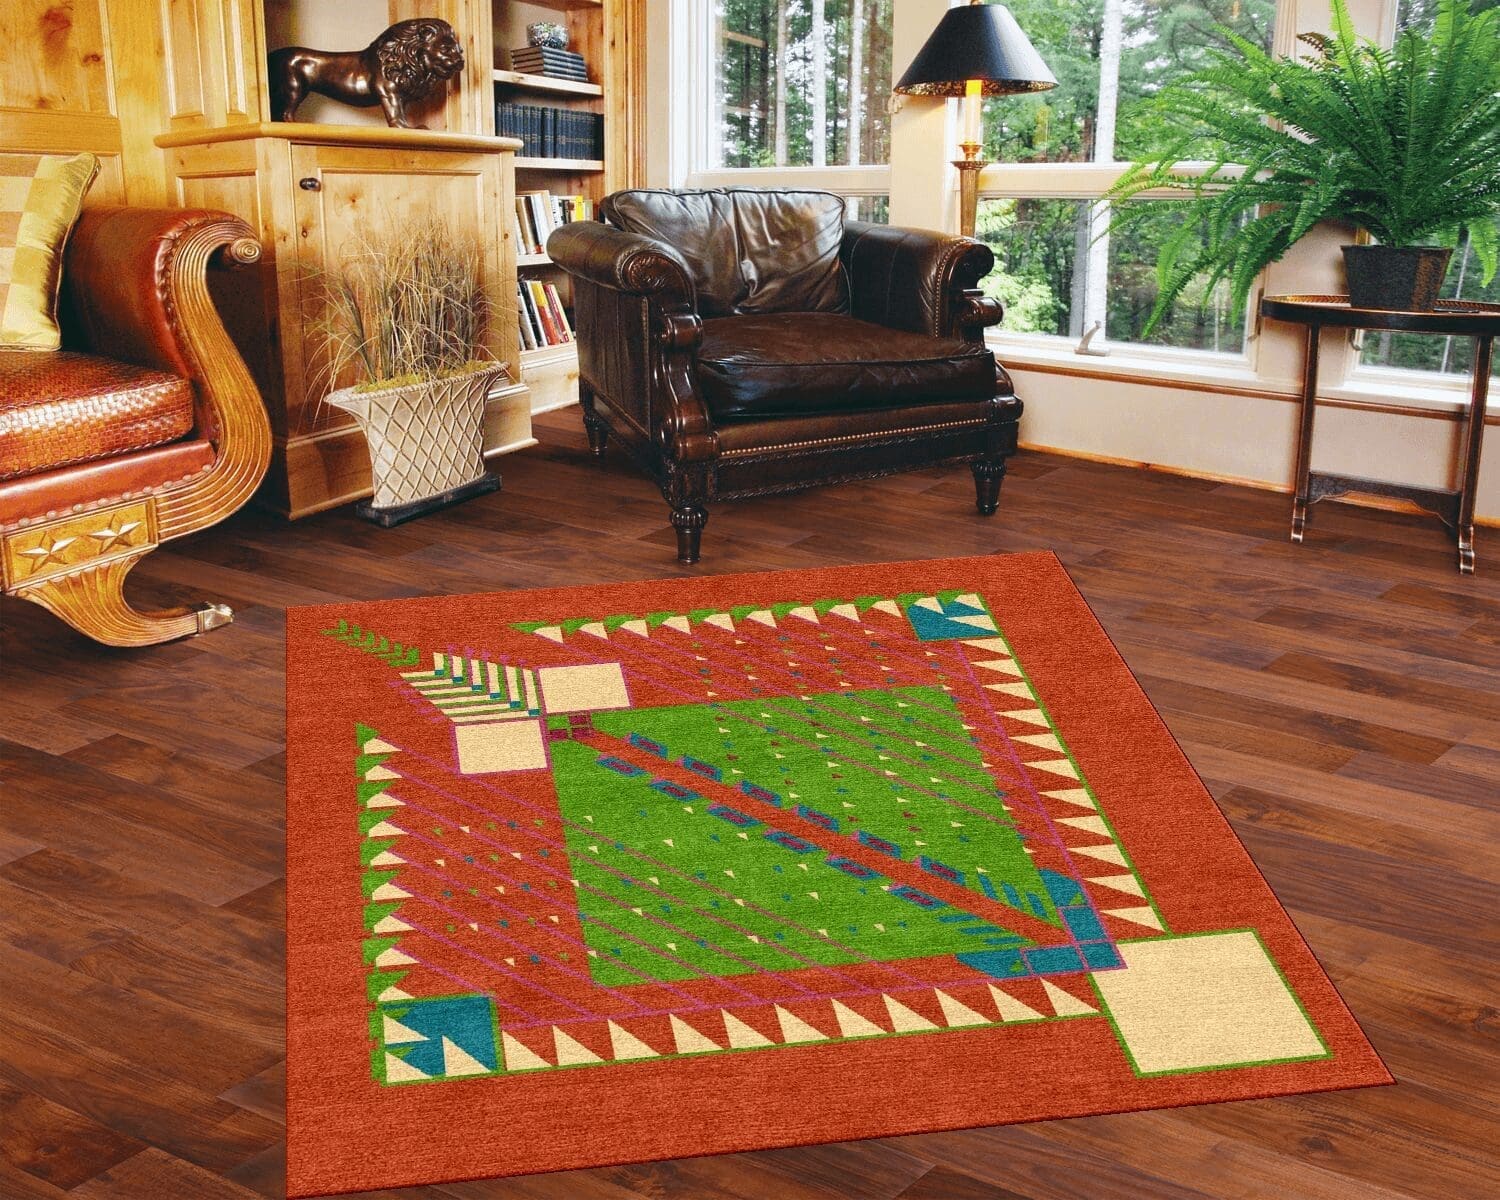 Custom Hand Tufted Rug inspired by carpet in Arizona Biltmore